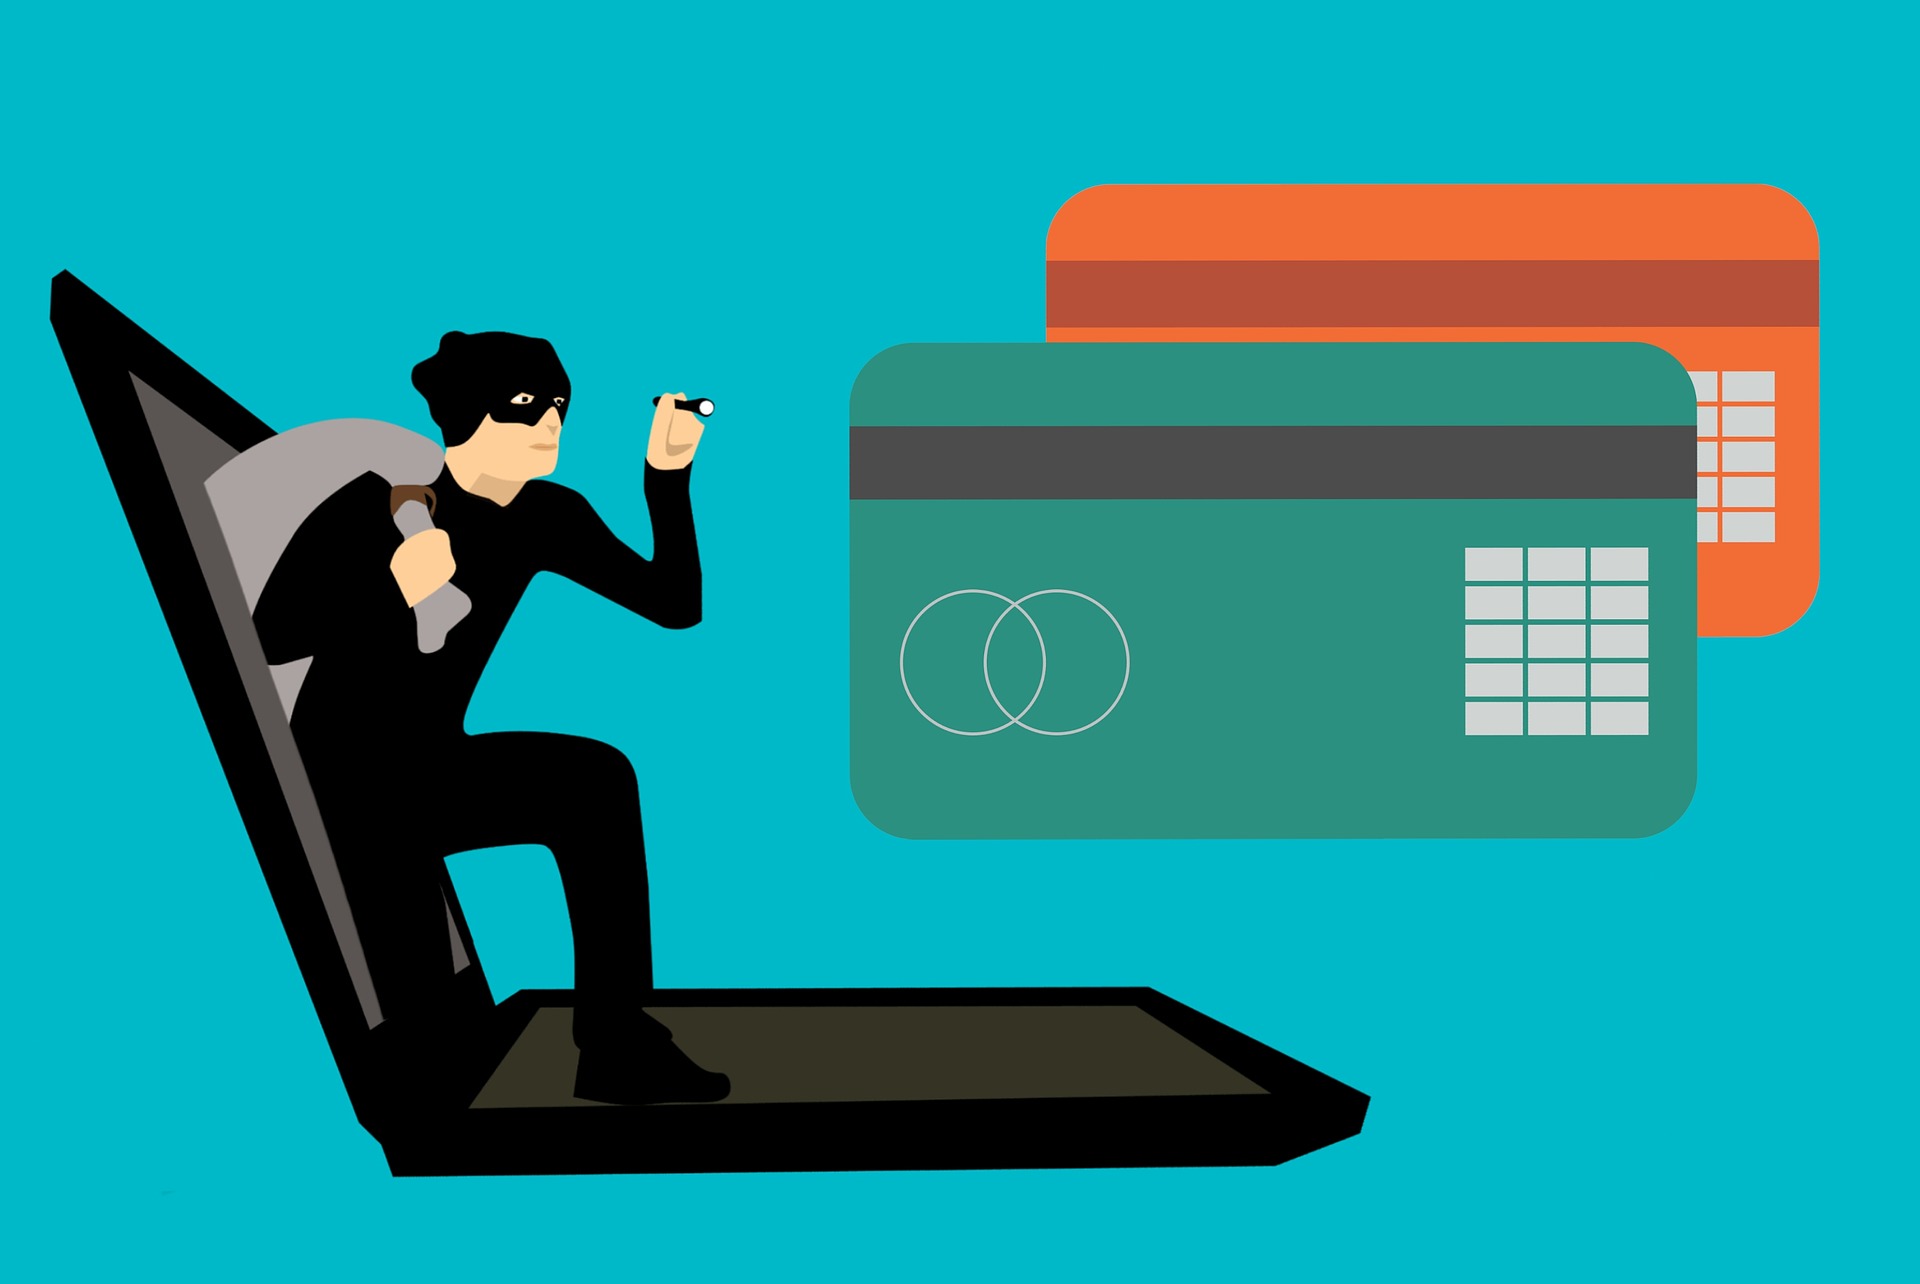 Credit card fraud thief steals credit card info